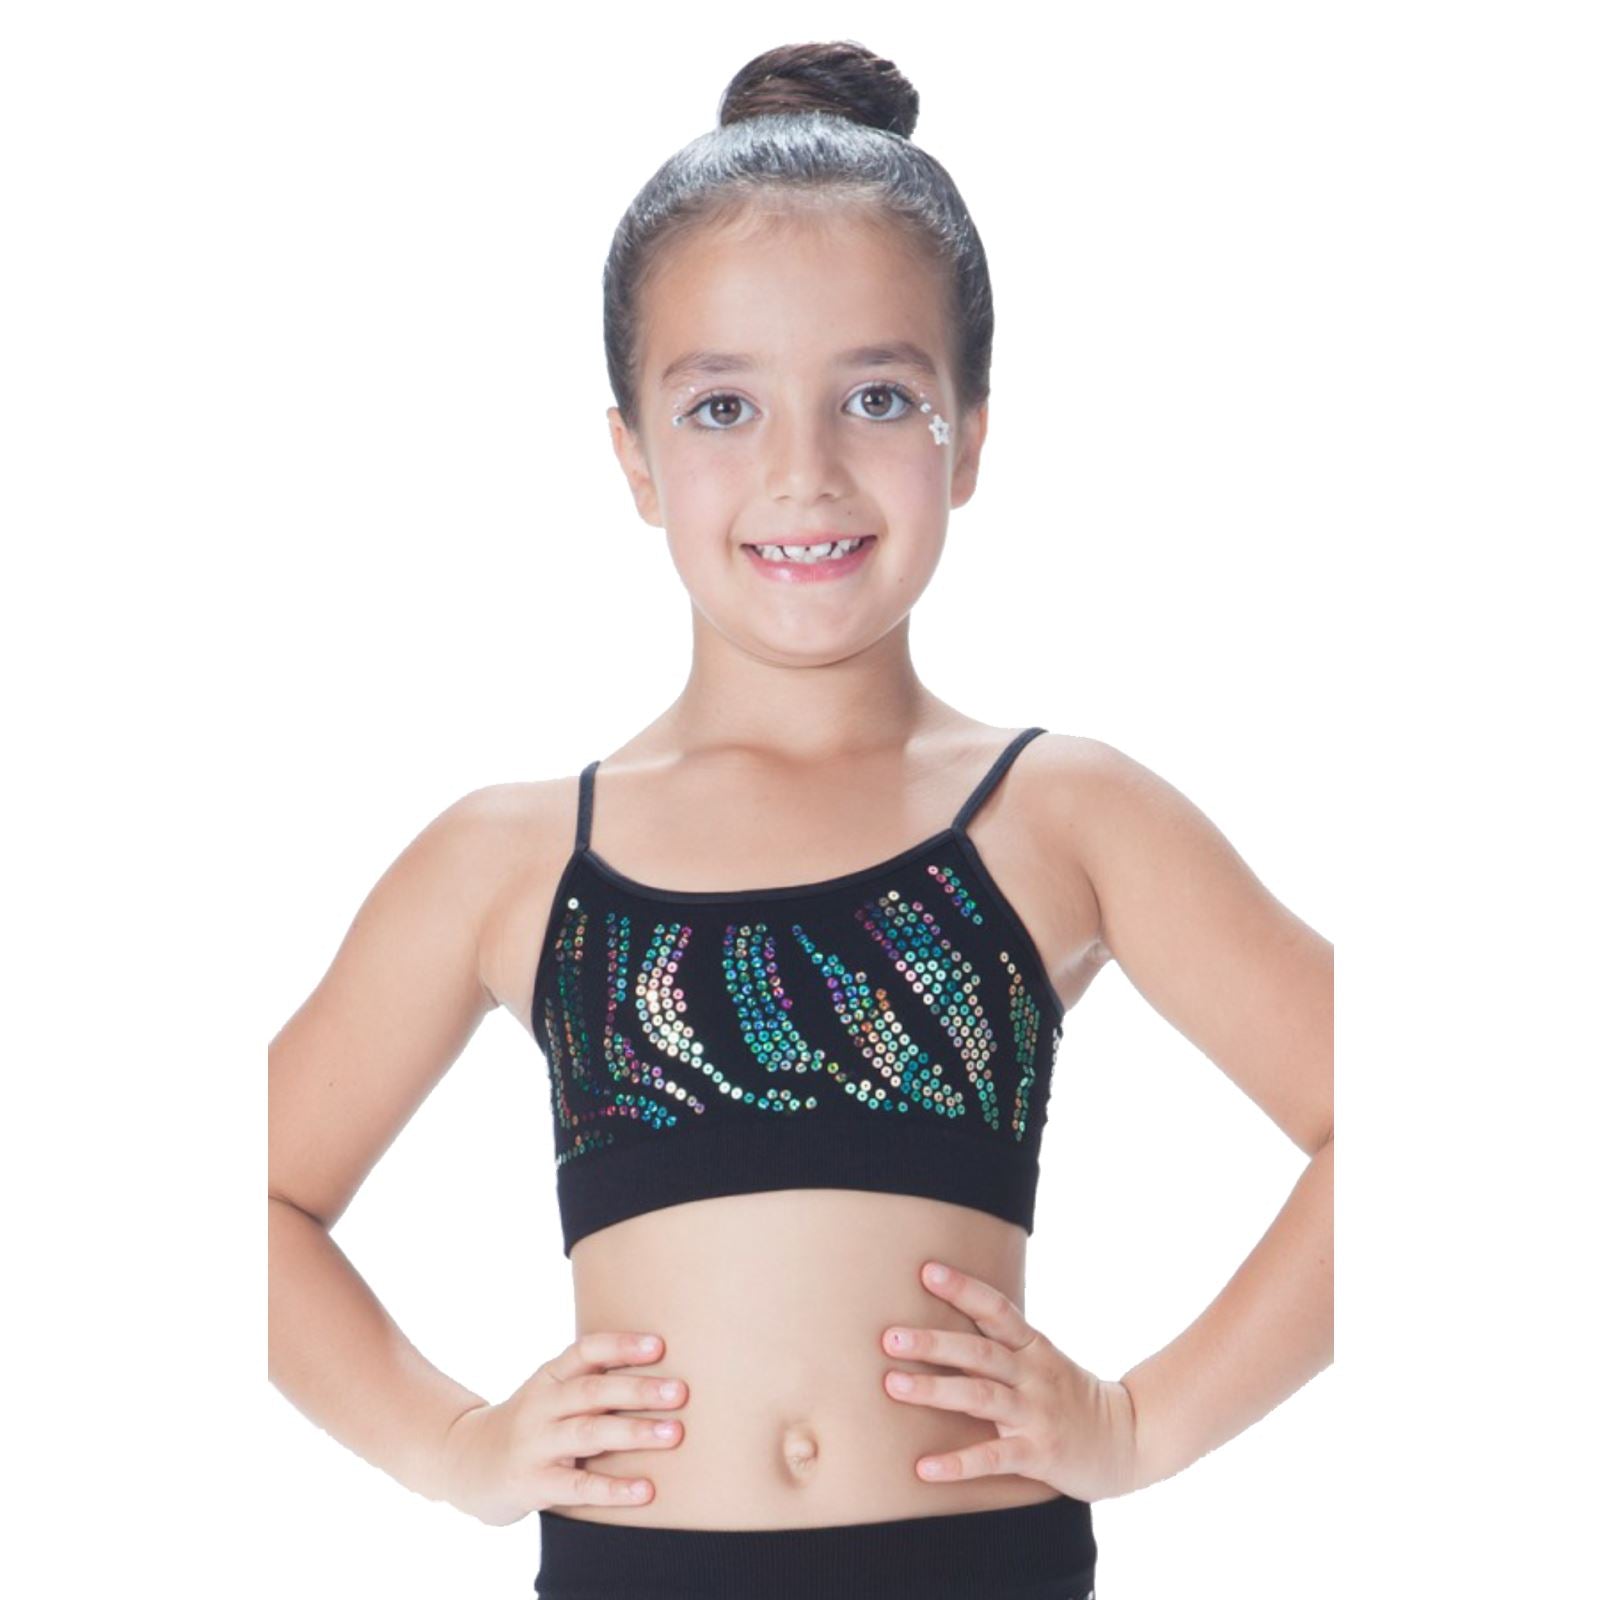 CHILDS ZEBRA SEQUIN SEAMLESS CAMISOLE CROP TOP Dancewear Kurve Multi Sequin One Size (Age 4 - 8) 